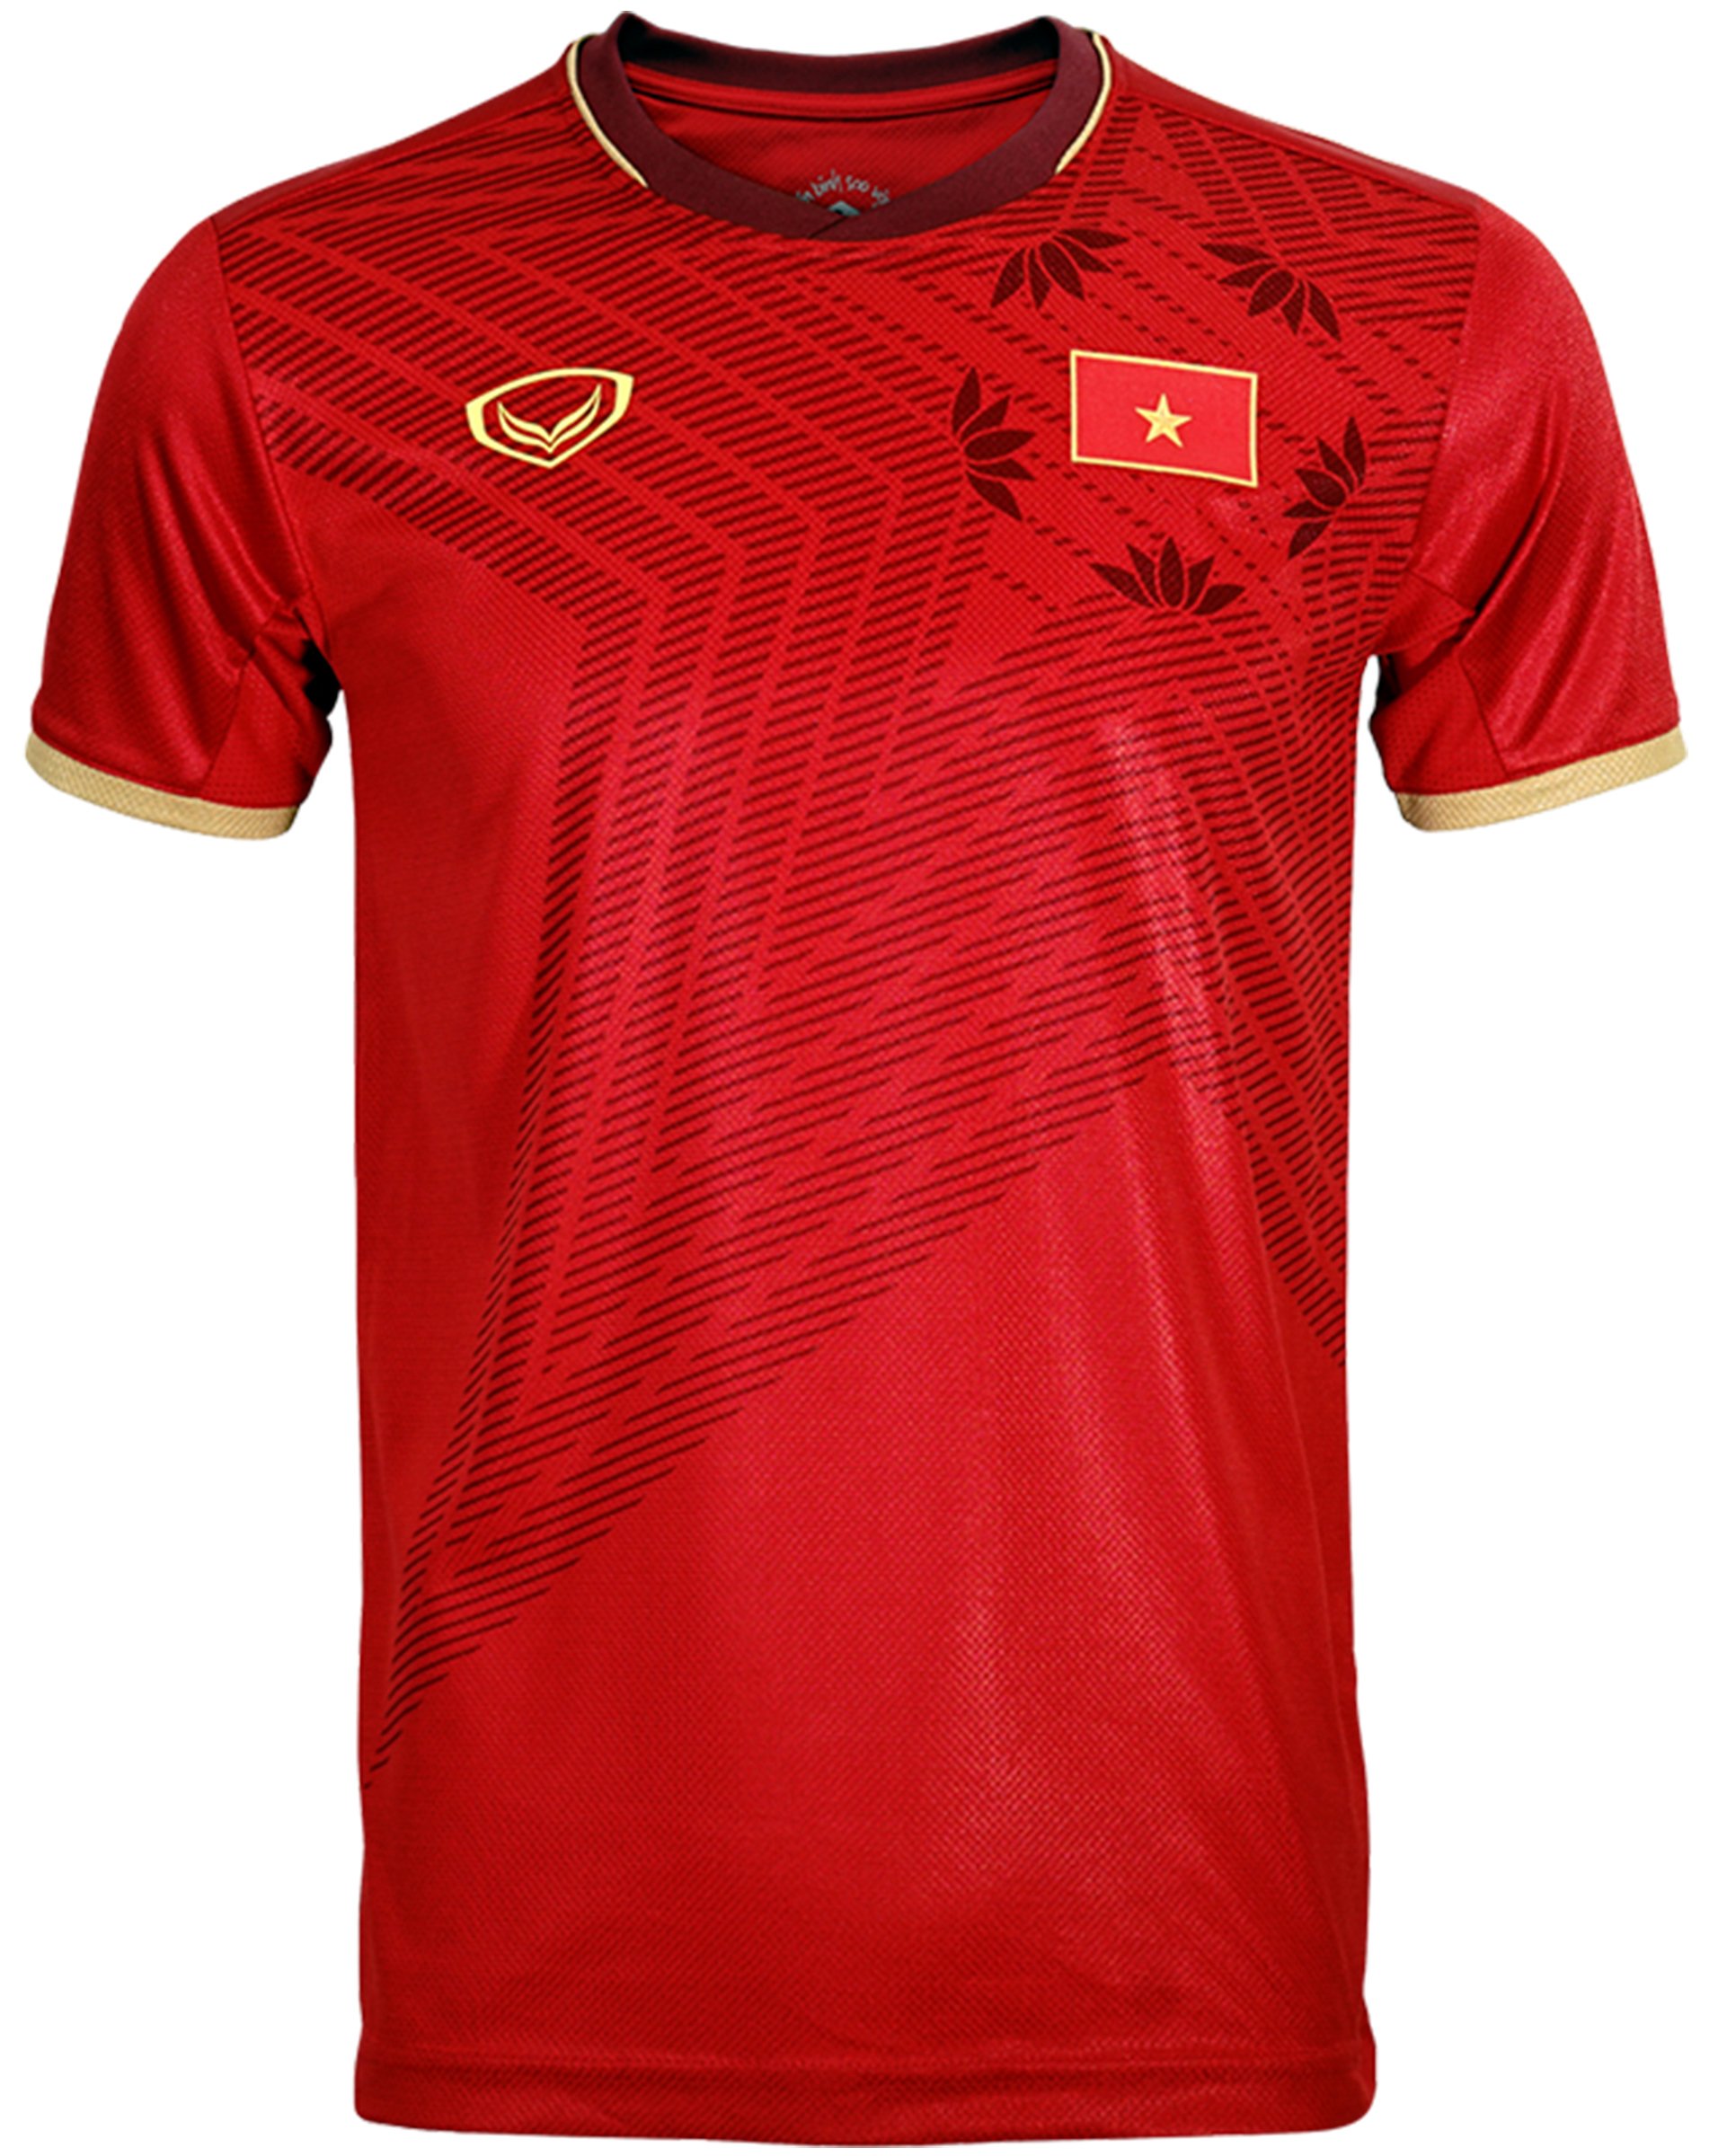 2020 Vietnam National Team Genuine Official Football Soccer Jersey Shirt  Home Red - Player Version - thailandoriginalmade